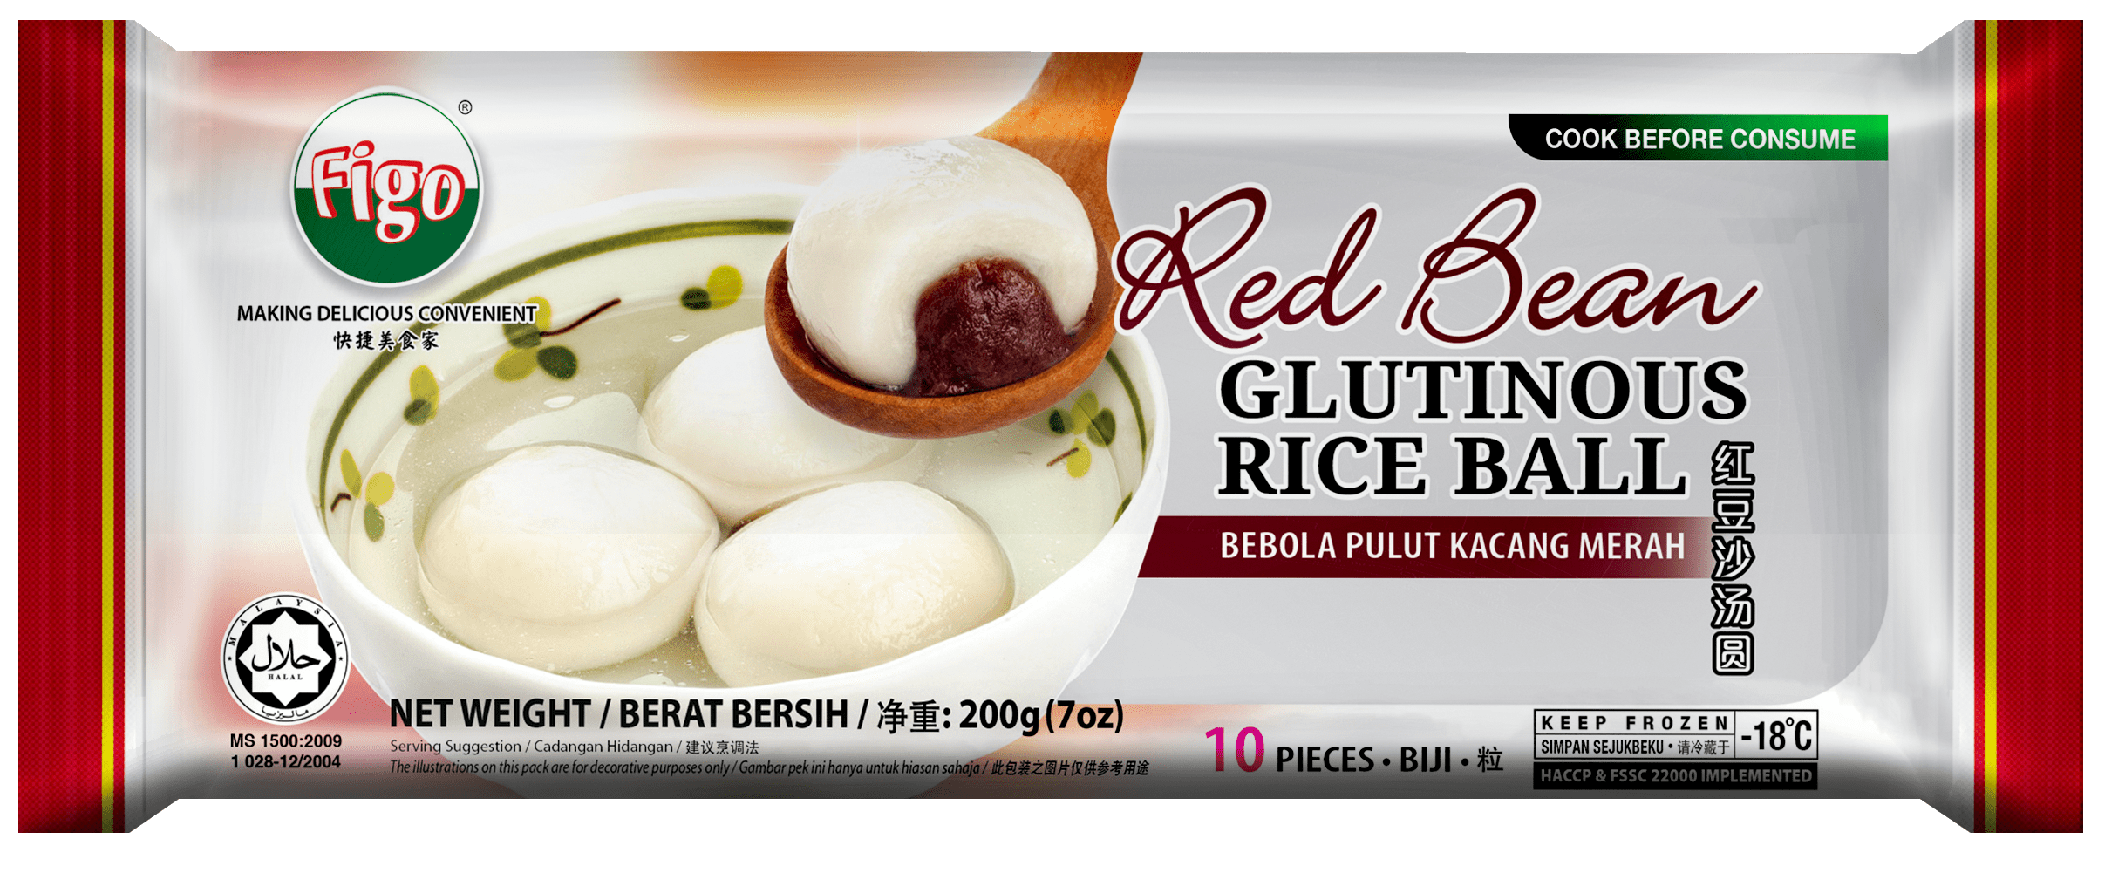 Figo Glutinous Rice Ball - Red Bean